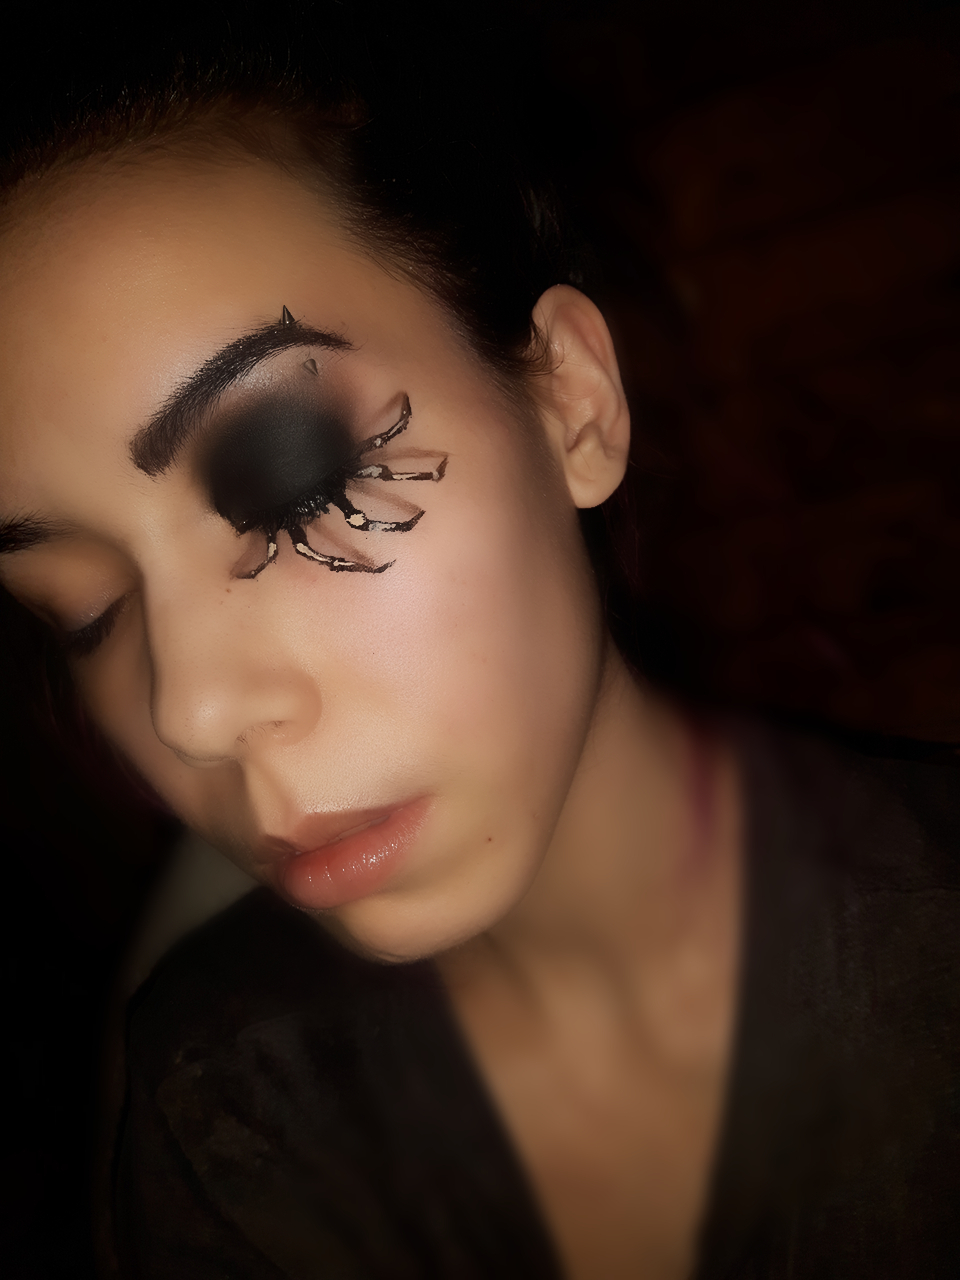 Spider Eye Makeup 3d Spider Eye Makeup Halloween Look 3 Candeeglam